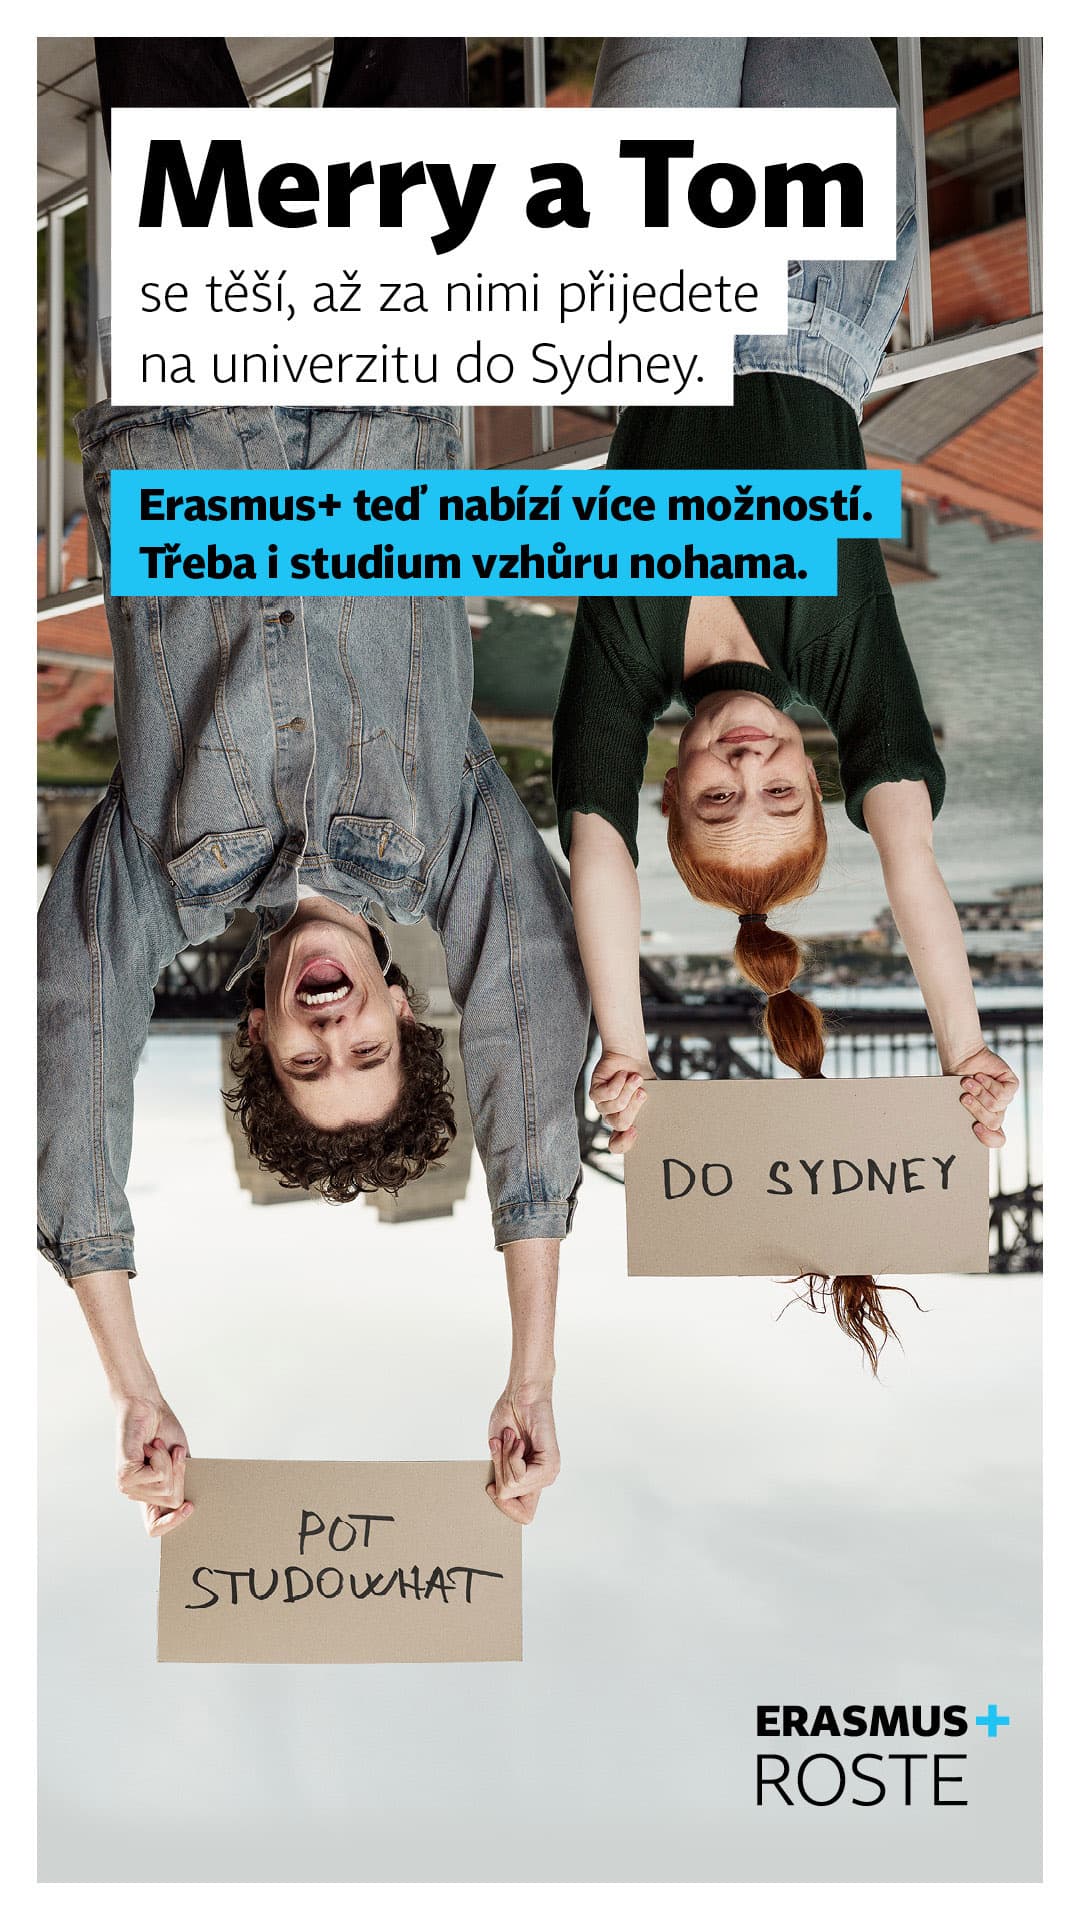 Erasmus Roste kampan2021 IG stories 1080x1920px4 Merry a Tom